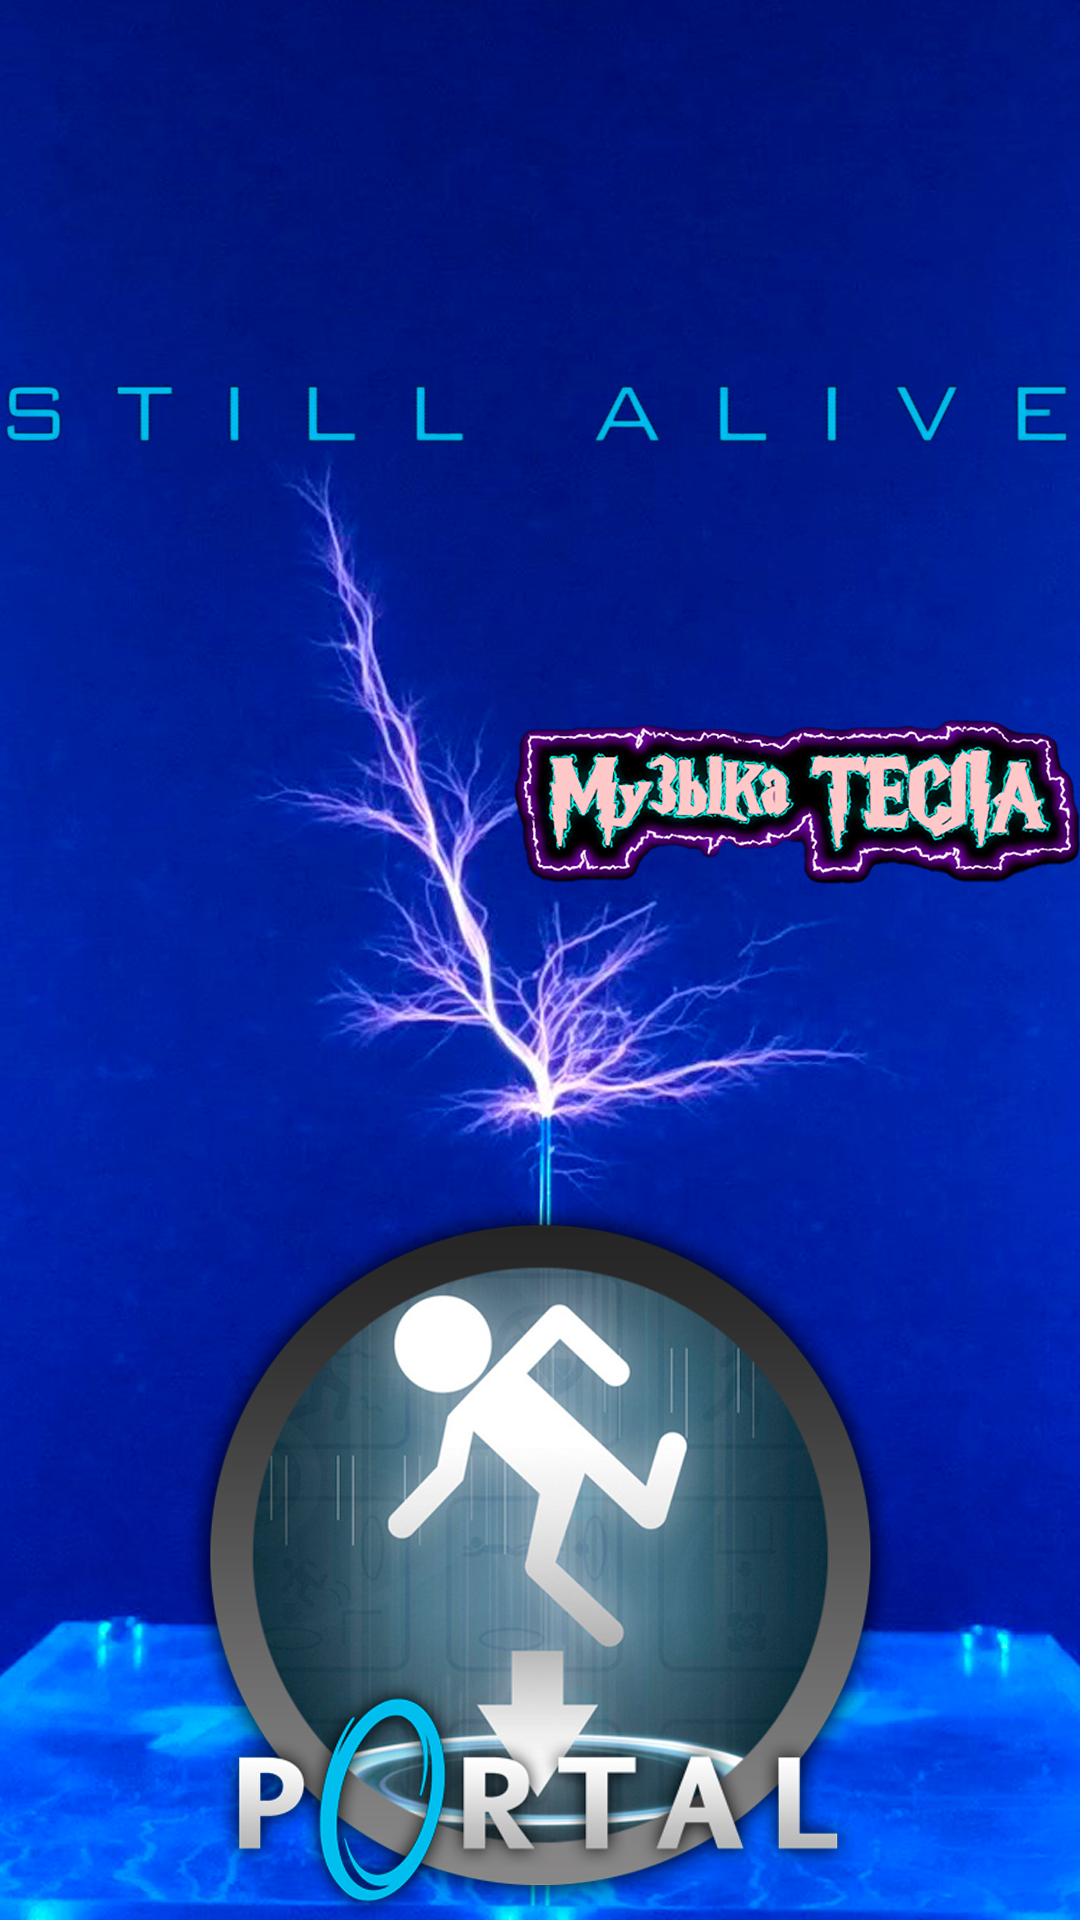 Portal - Still Alive Tesla Coil Mix #музыкатесла